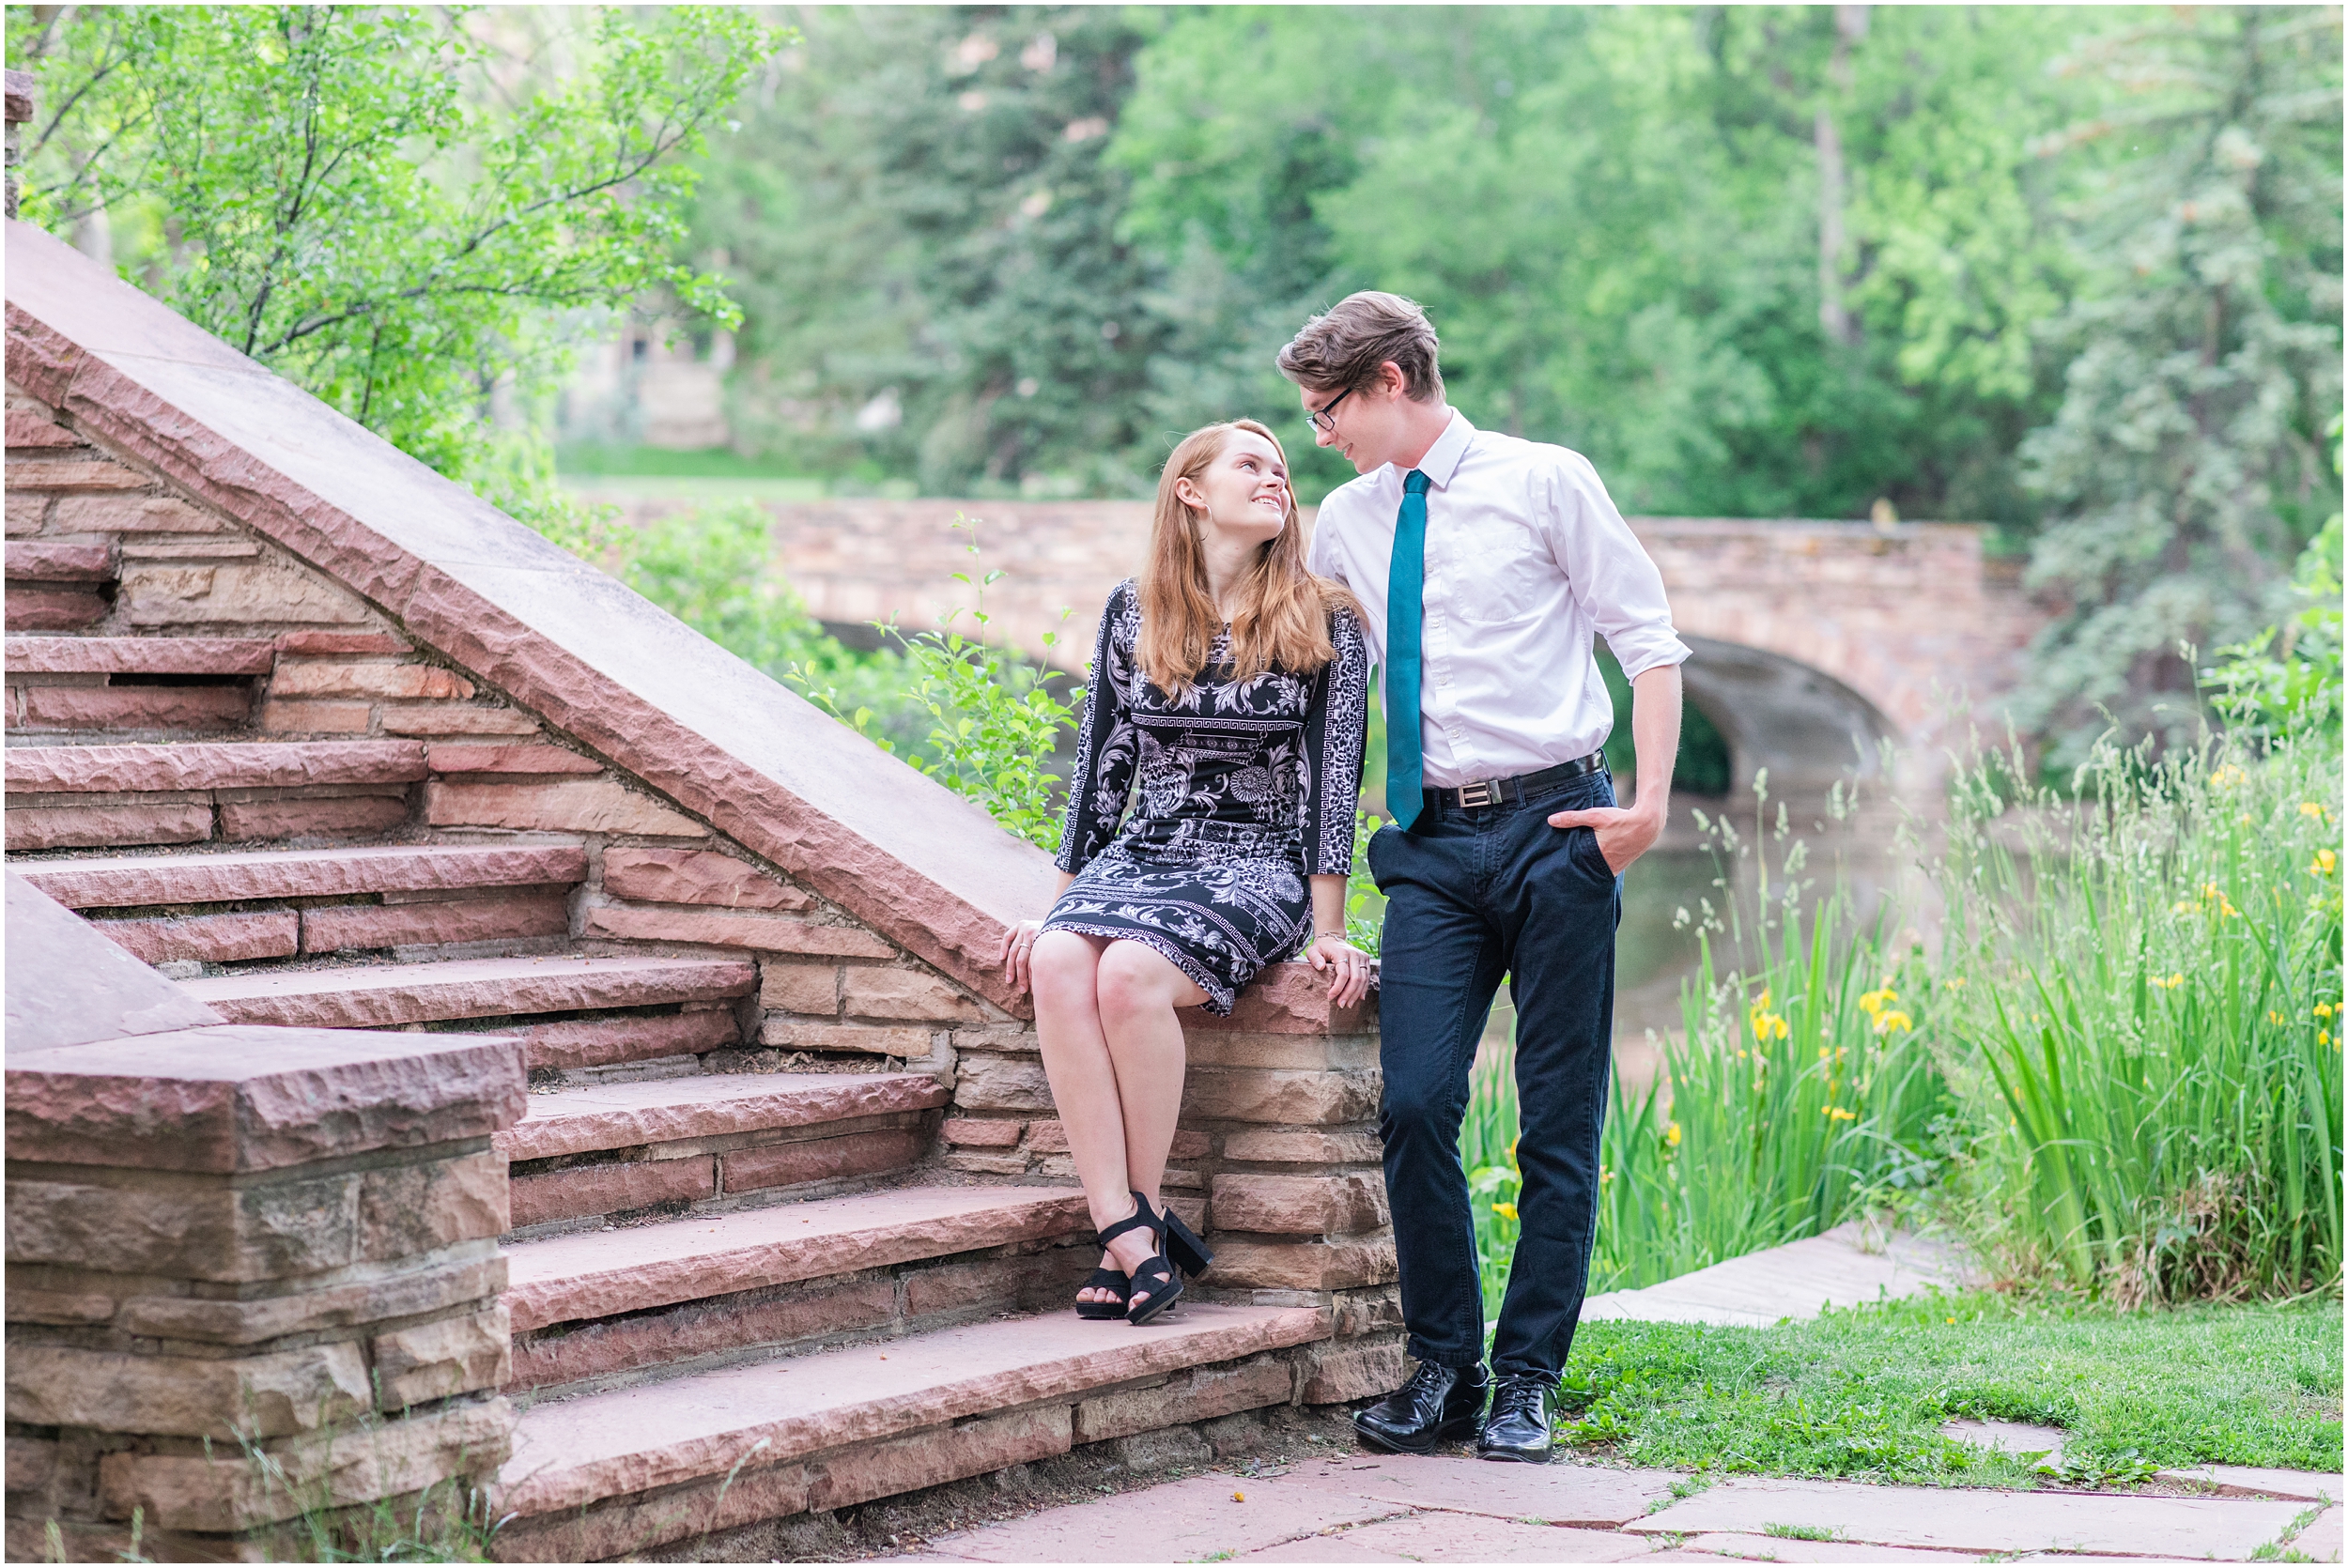 Nate and Teresa's Engagement Session at Varsity Bridge in Boulder Colorado